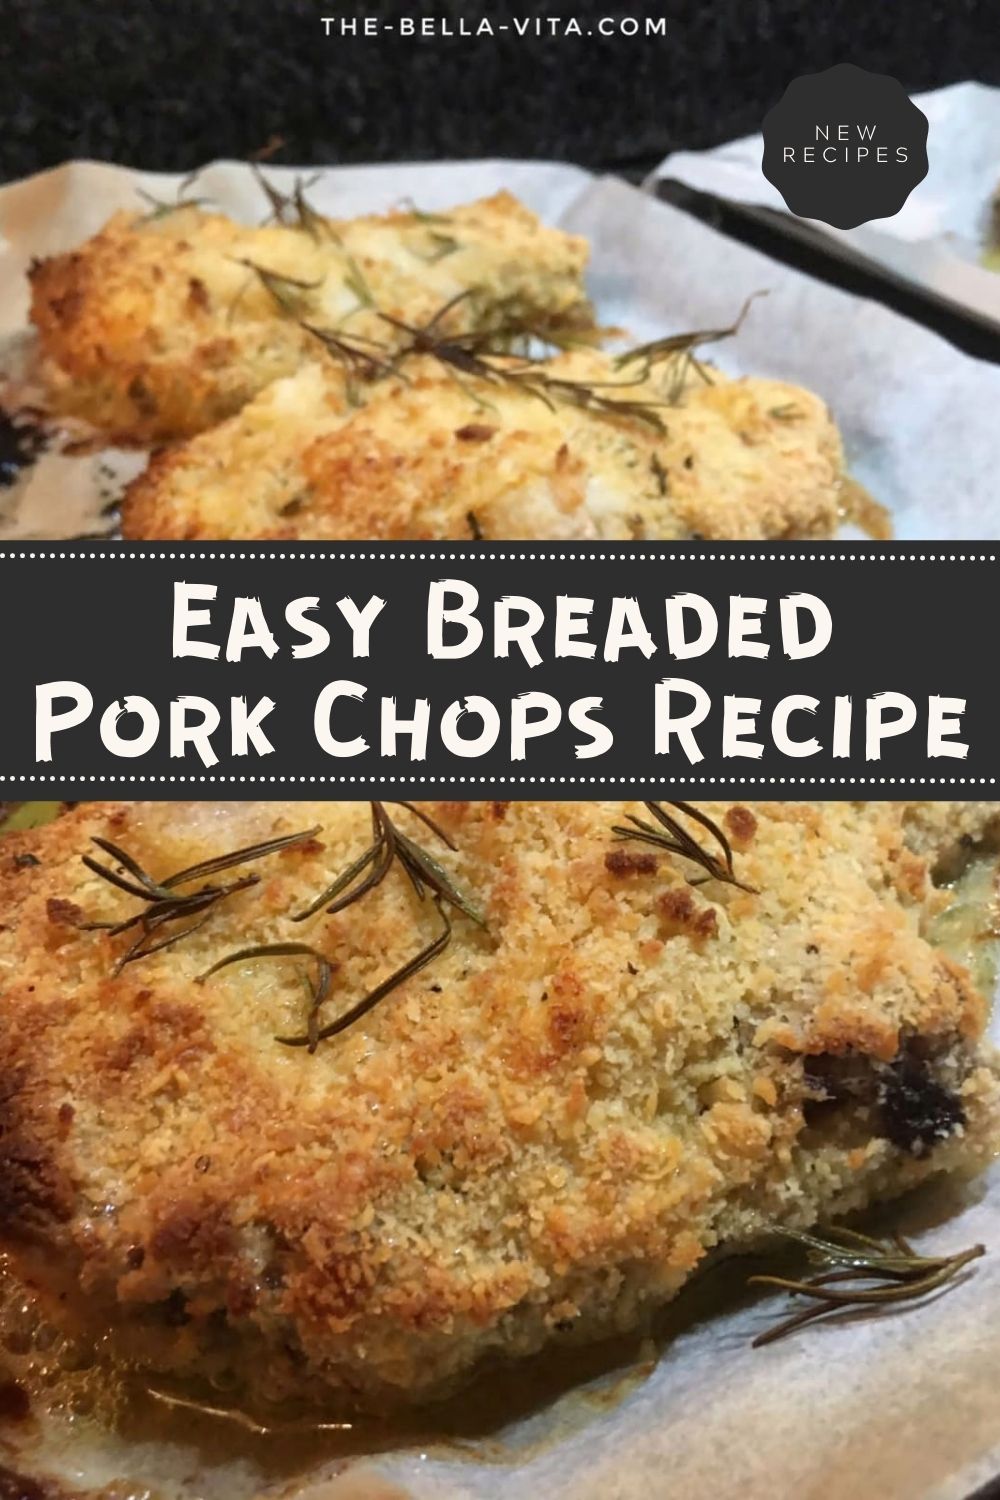 Breaded pork chops recipe